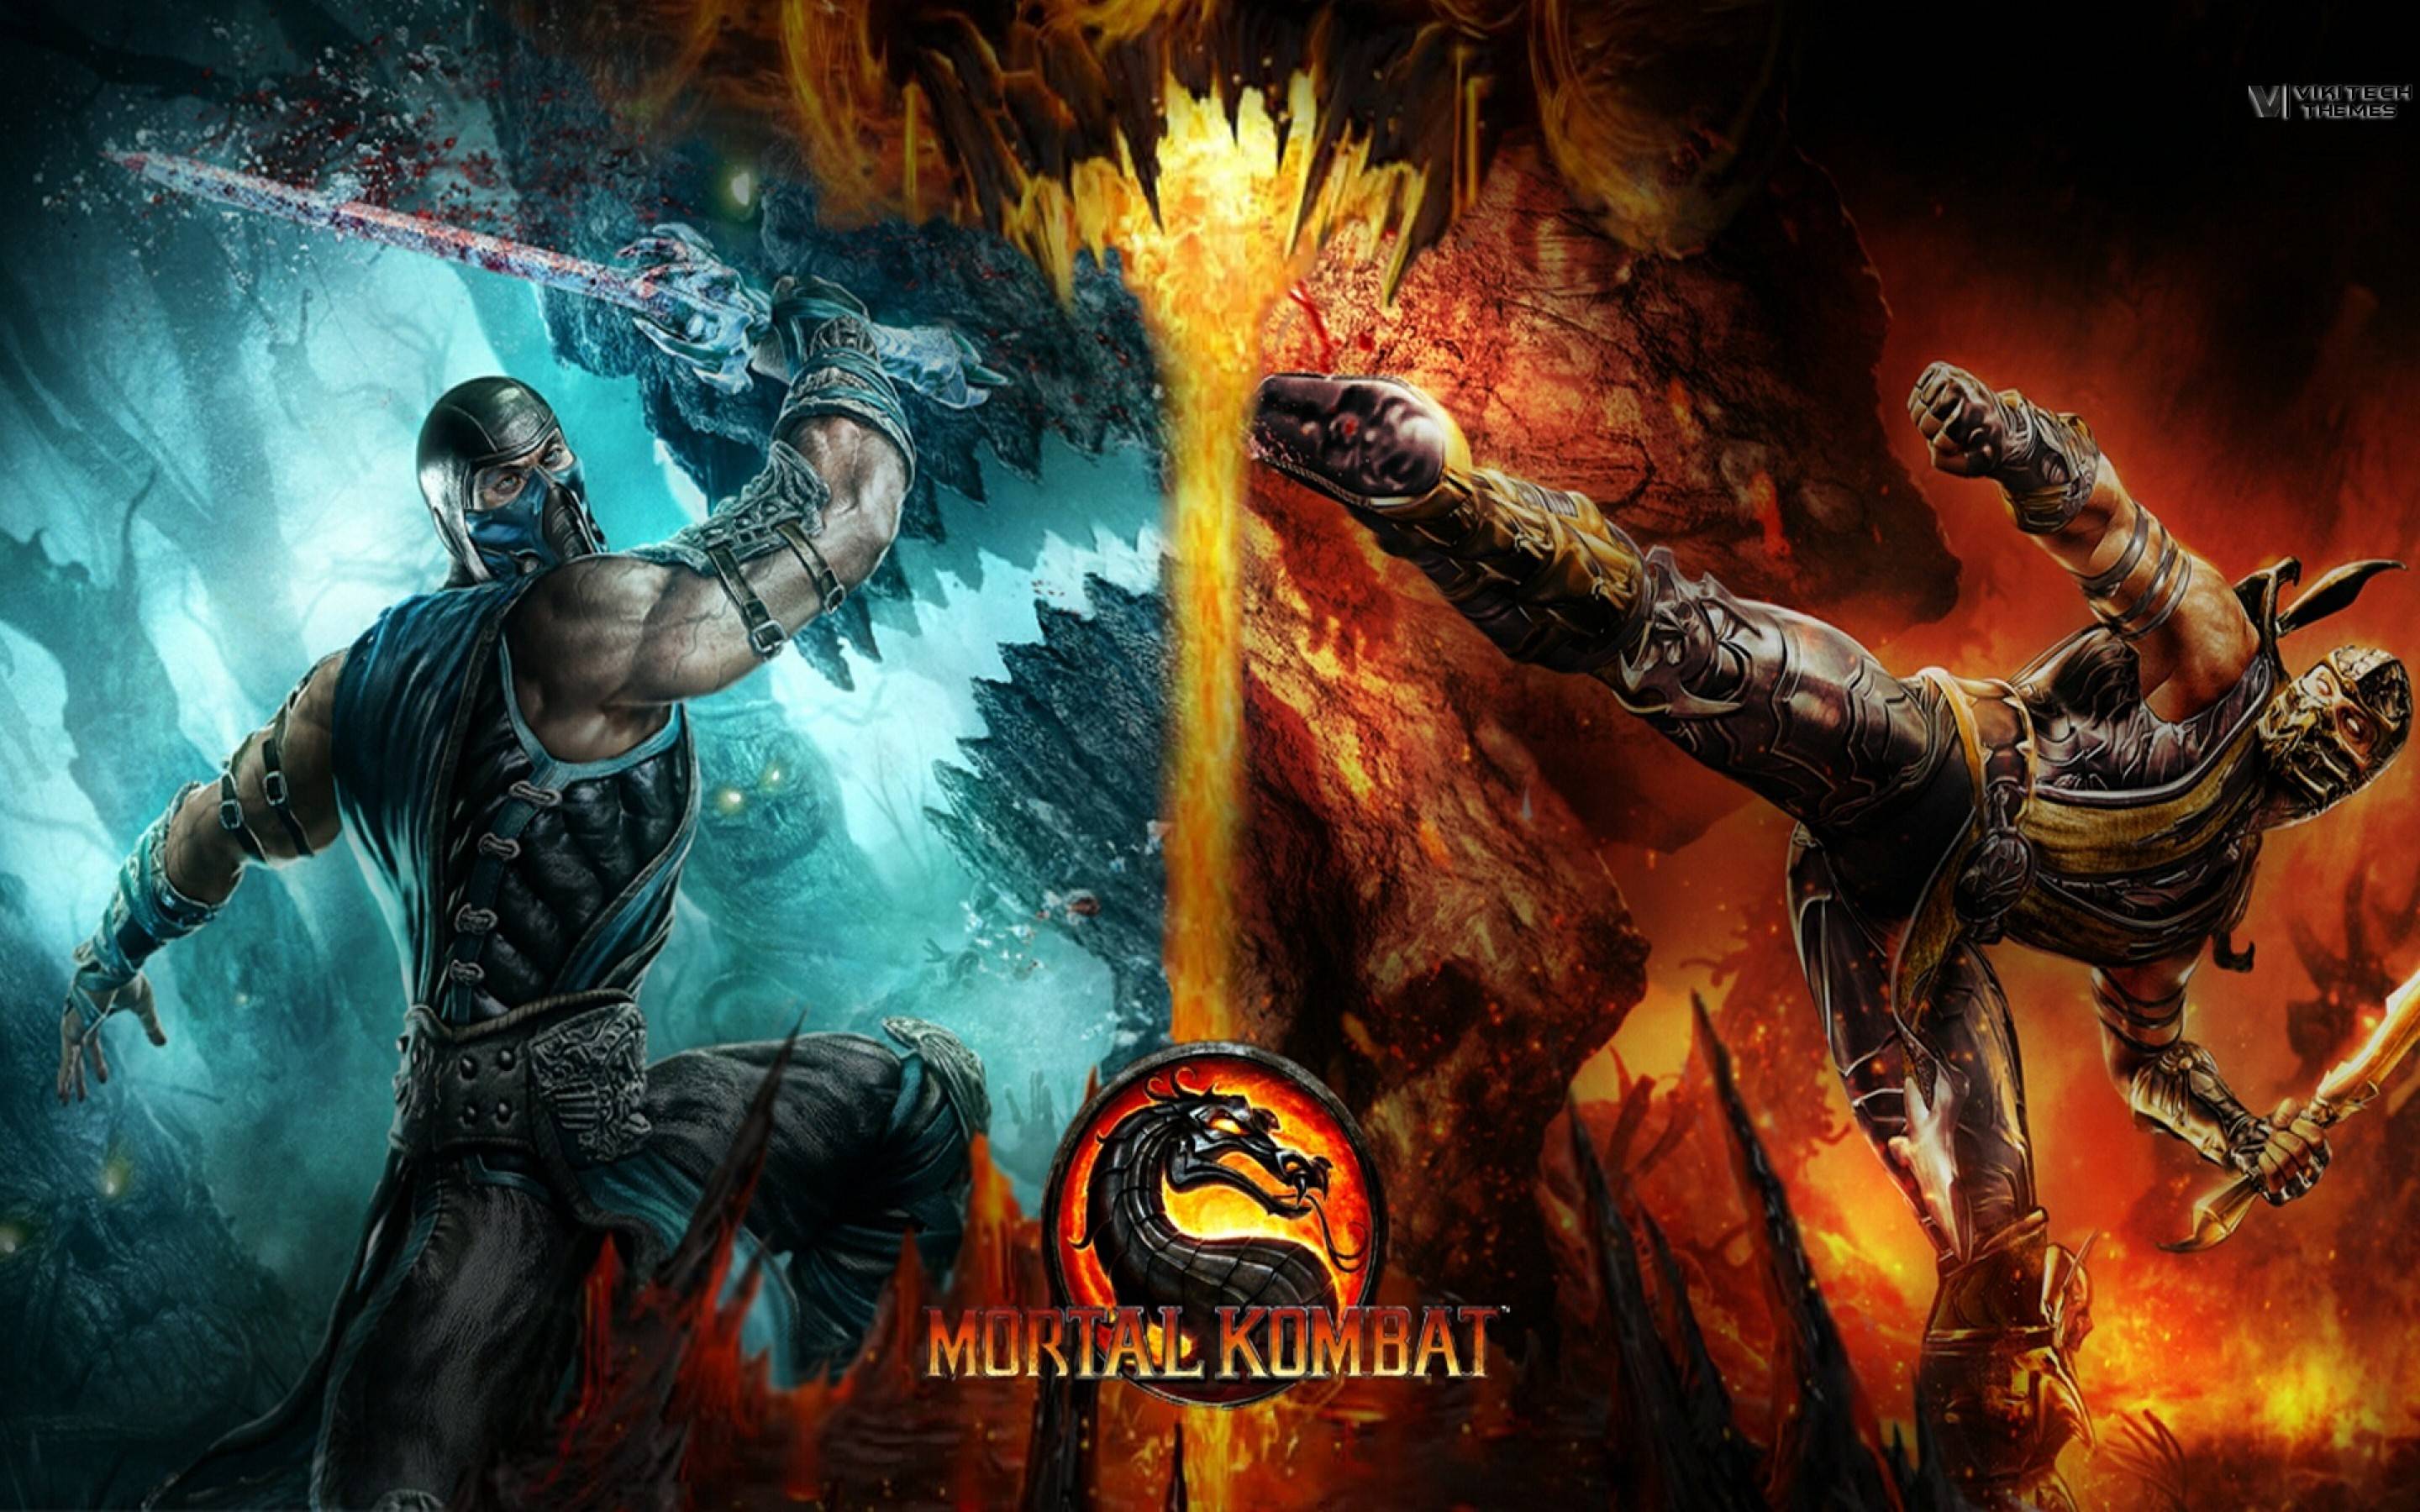 Free download Mortal Kombat HD Wallpaper 6 2880 X 1800 stmednet [2880x1800] for your Desktop, Mobile & Tablet. Explore Mortal Kombat HD Wallpaper. Mortal Kombat 9 Wallpaper, Mortal Kombat